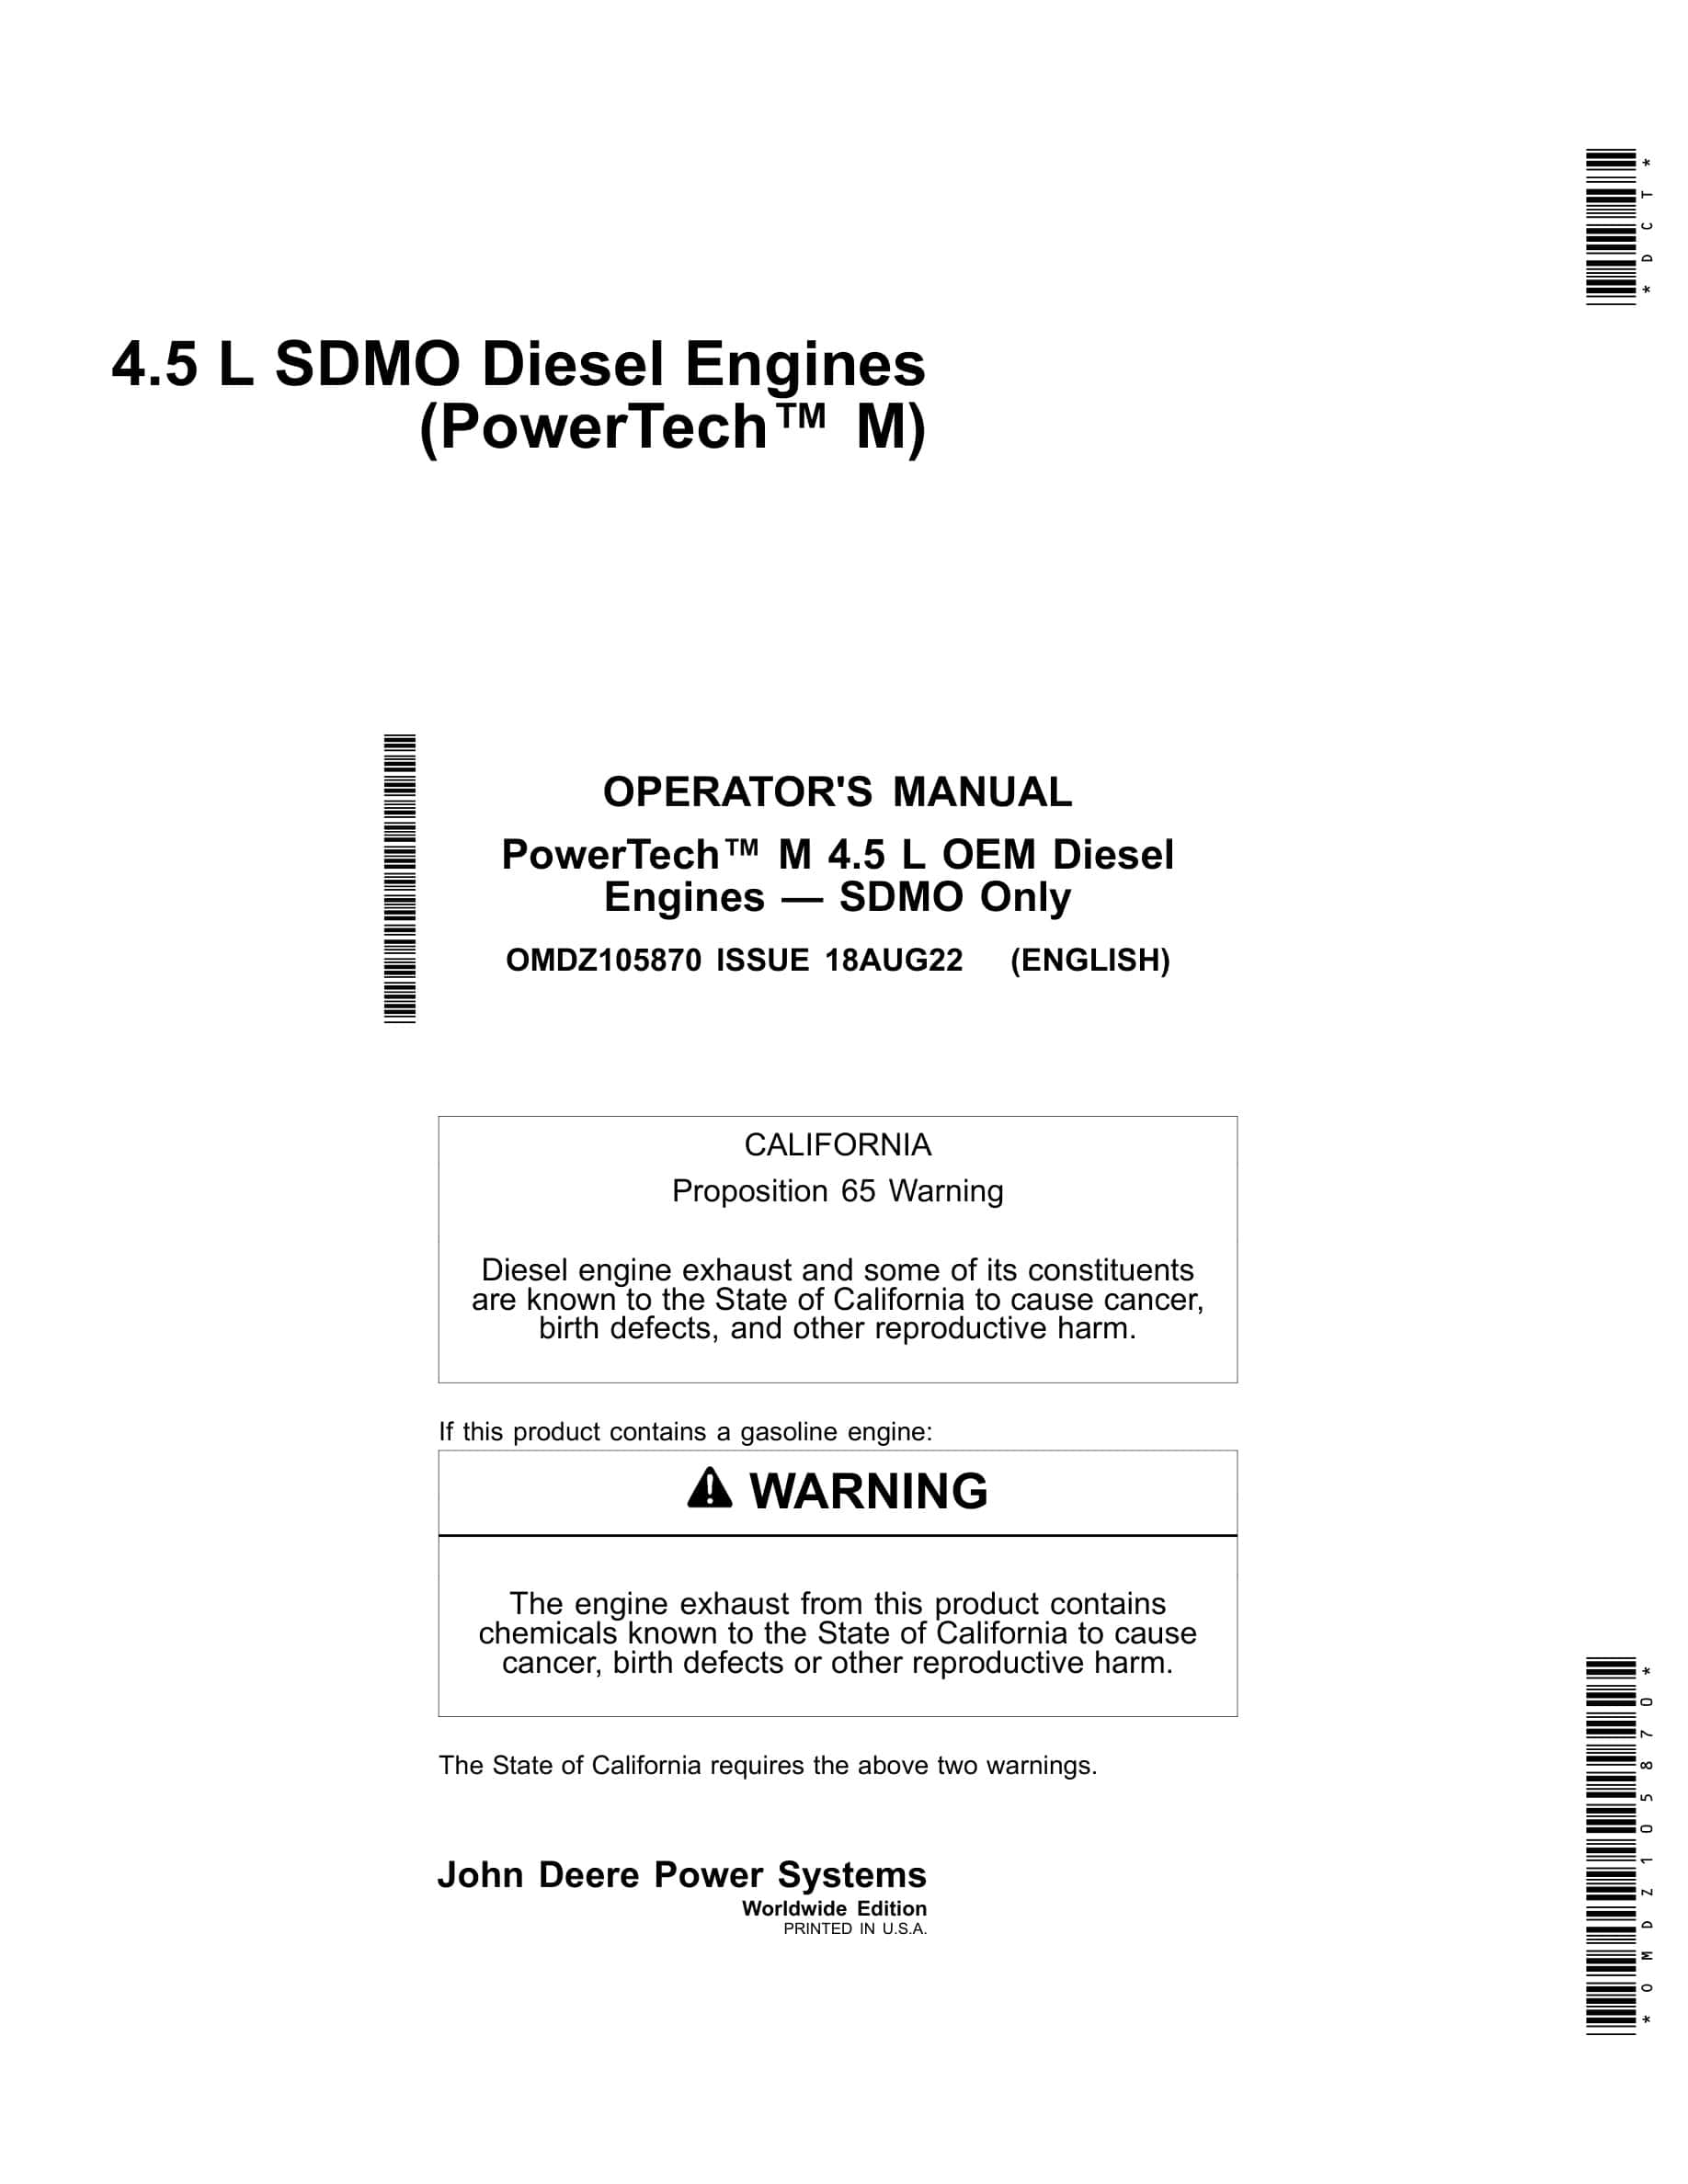 John Deere PowerTech 4.5 L SDMO Diesel Engines Operator Manual OMDZ105870-1